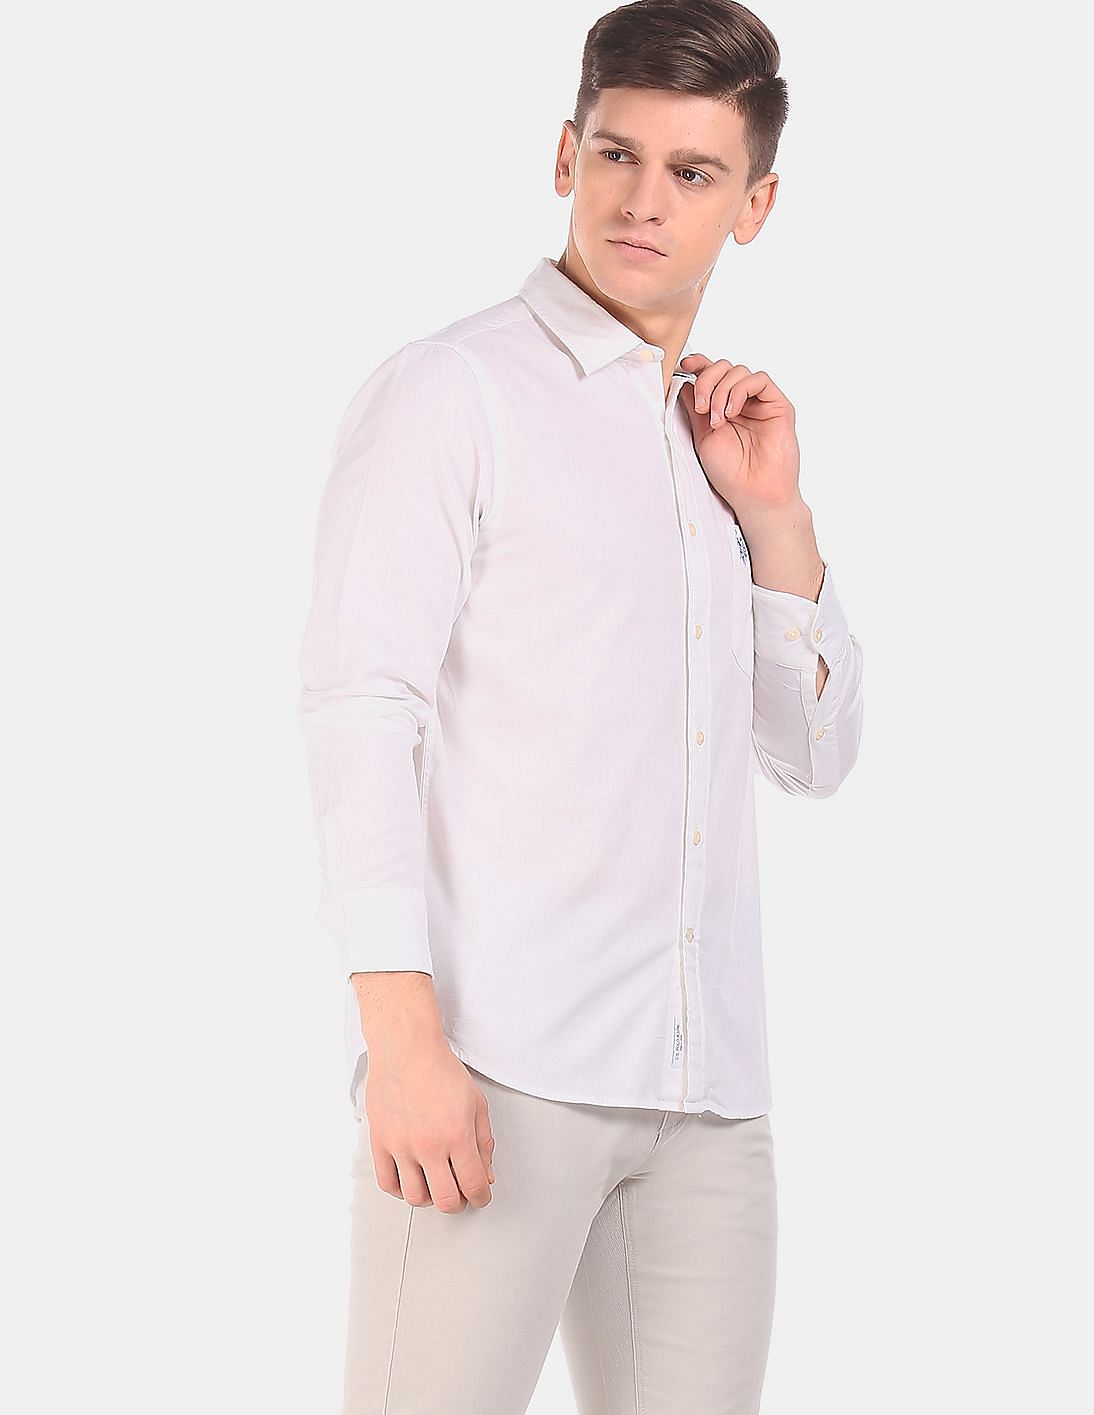 Buy U.S. Polo Assn. Men White Long Sleeve Solid Casual Shirt - NNNOW.com